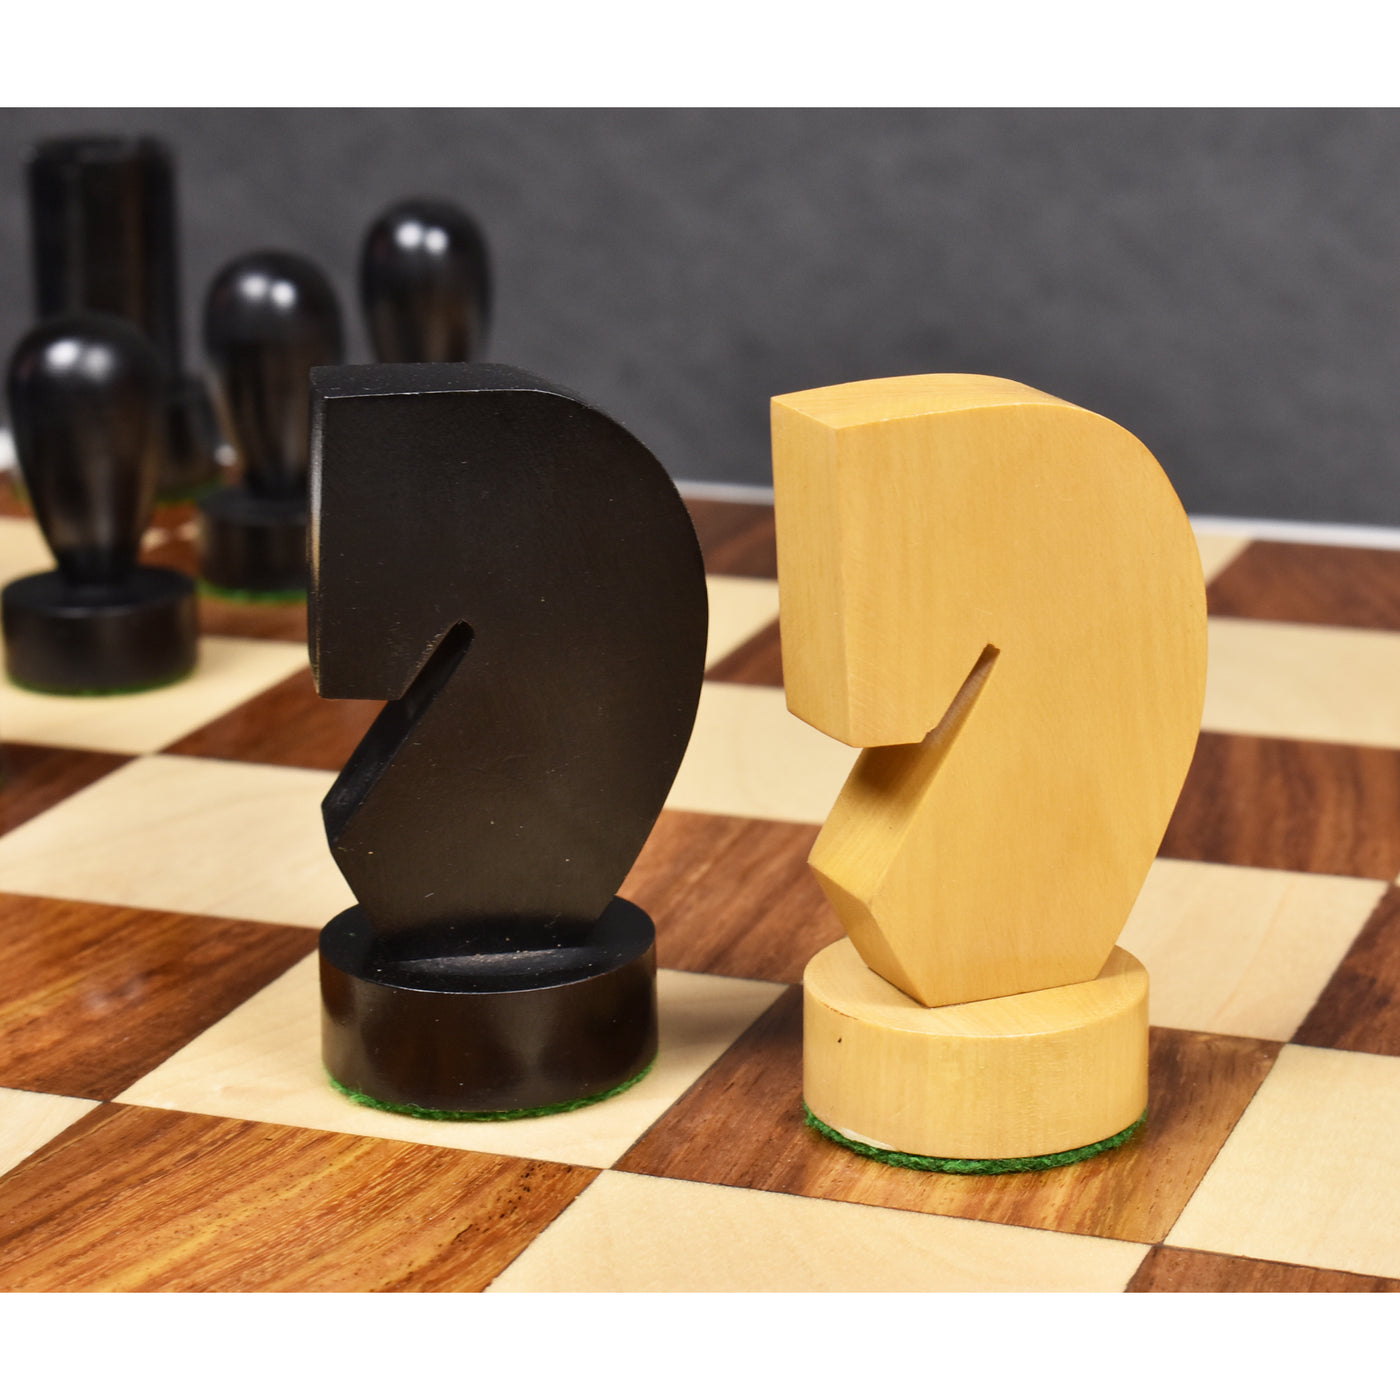 Berliner Modern Minimalist Chess Pieces Only set